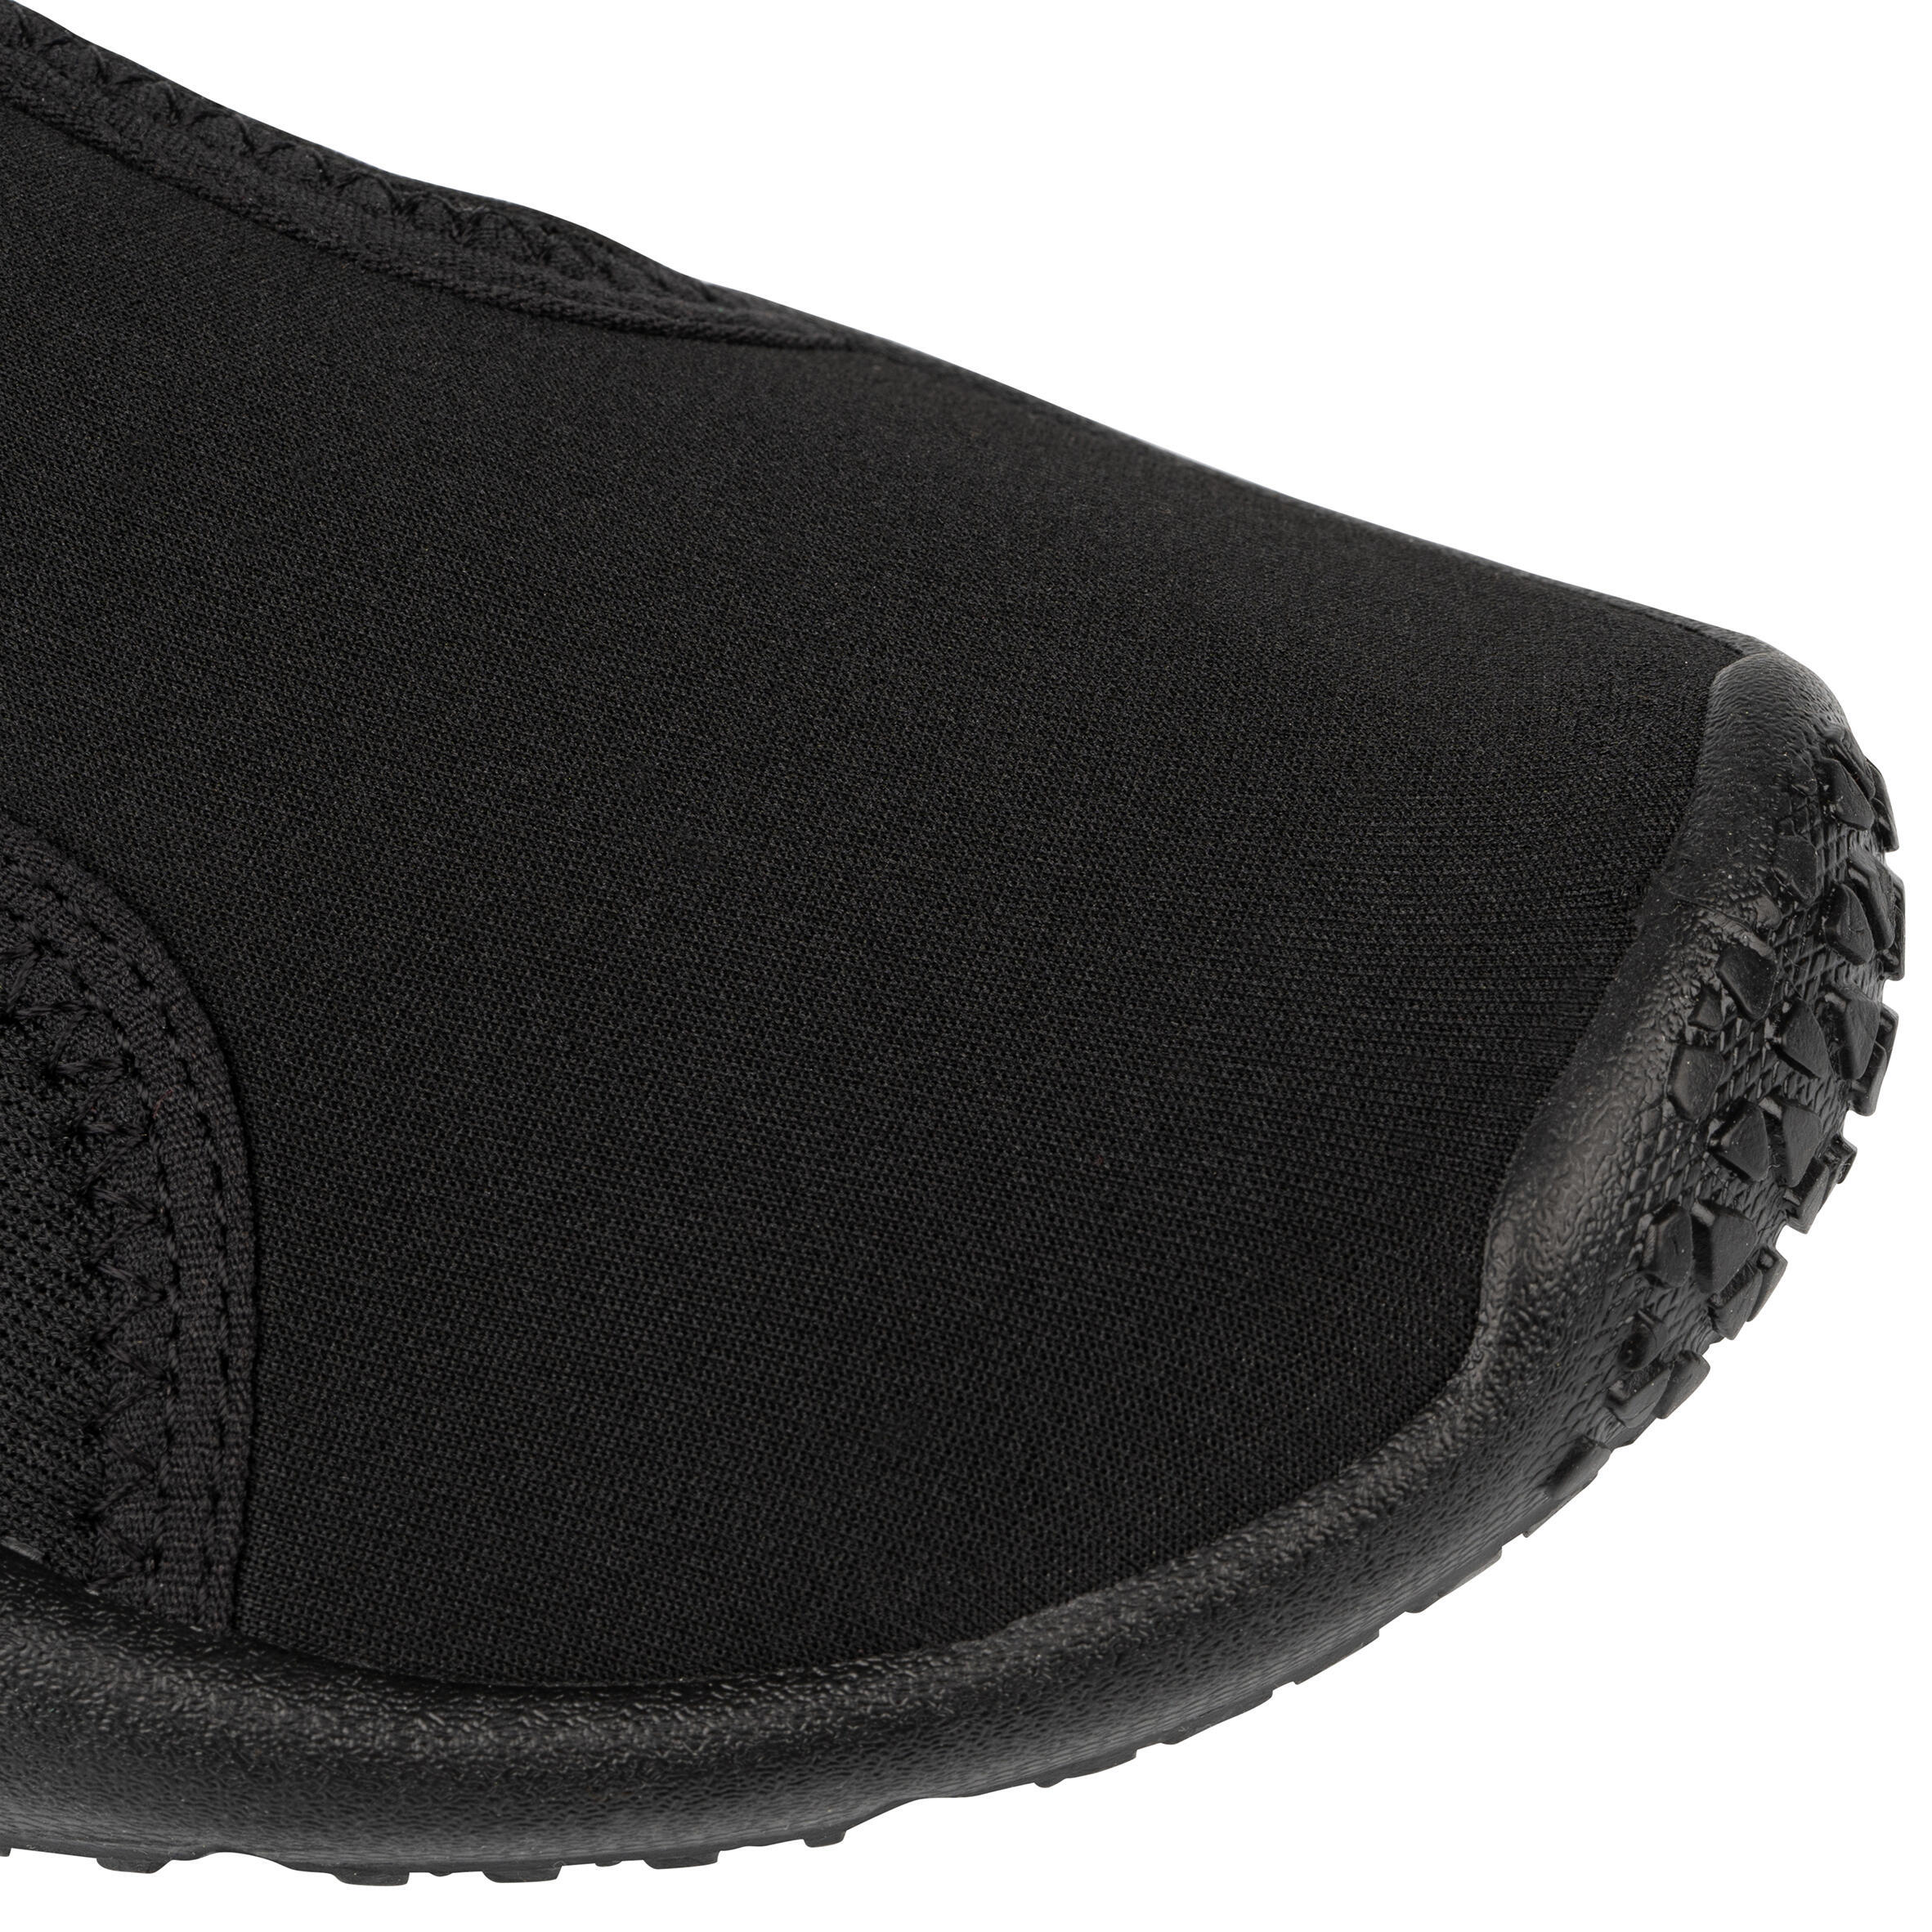 Adult Elasticated Water Shoes Aquashoes 120 - Black 7/10